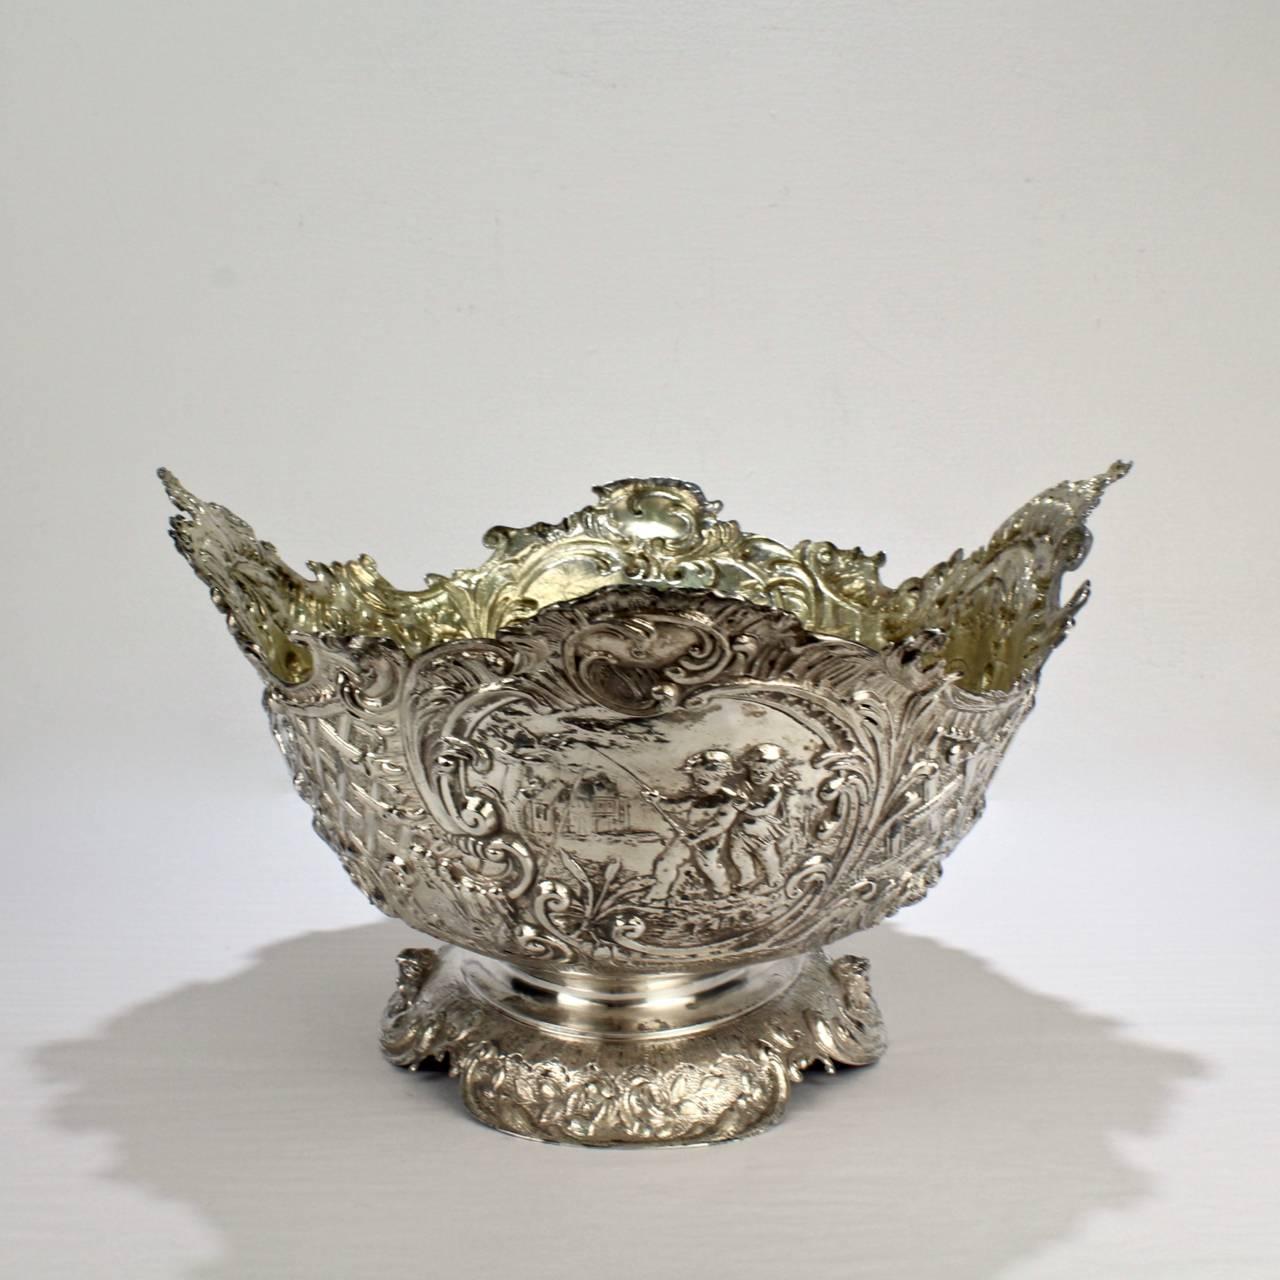 19th Century German Rococo Revival Repoussé 800 Silver Centerpiece or Bowl For Sale 2